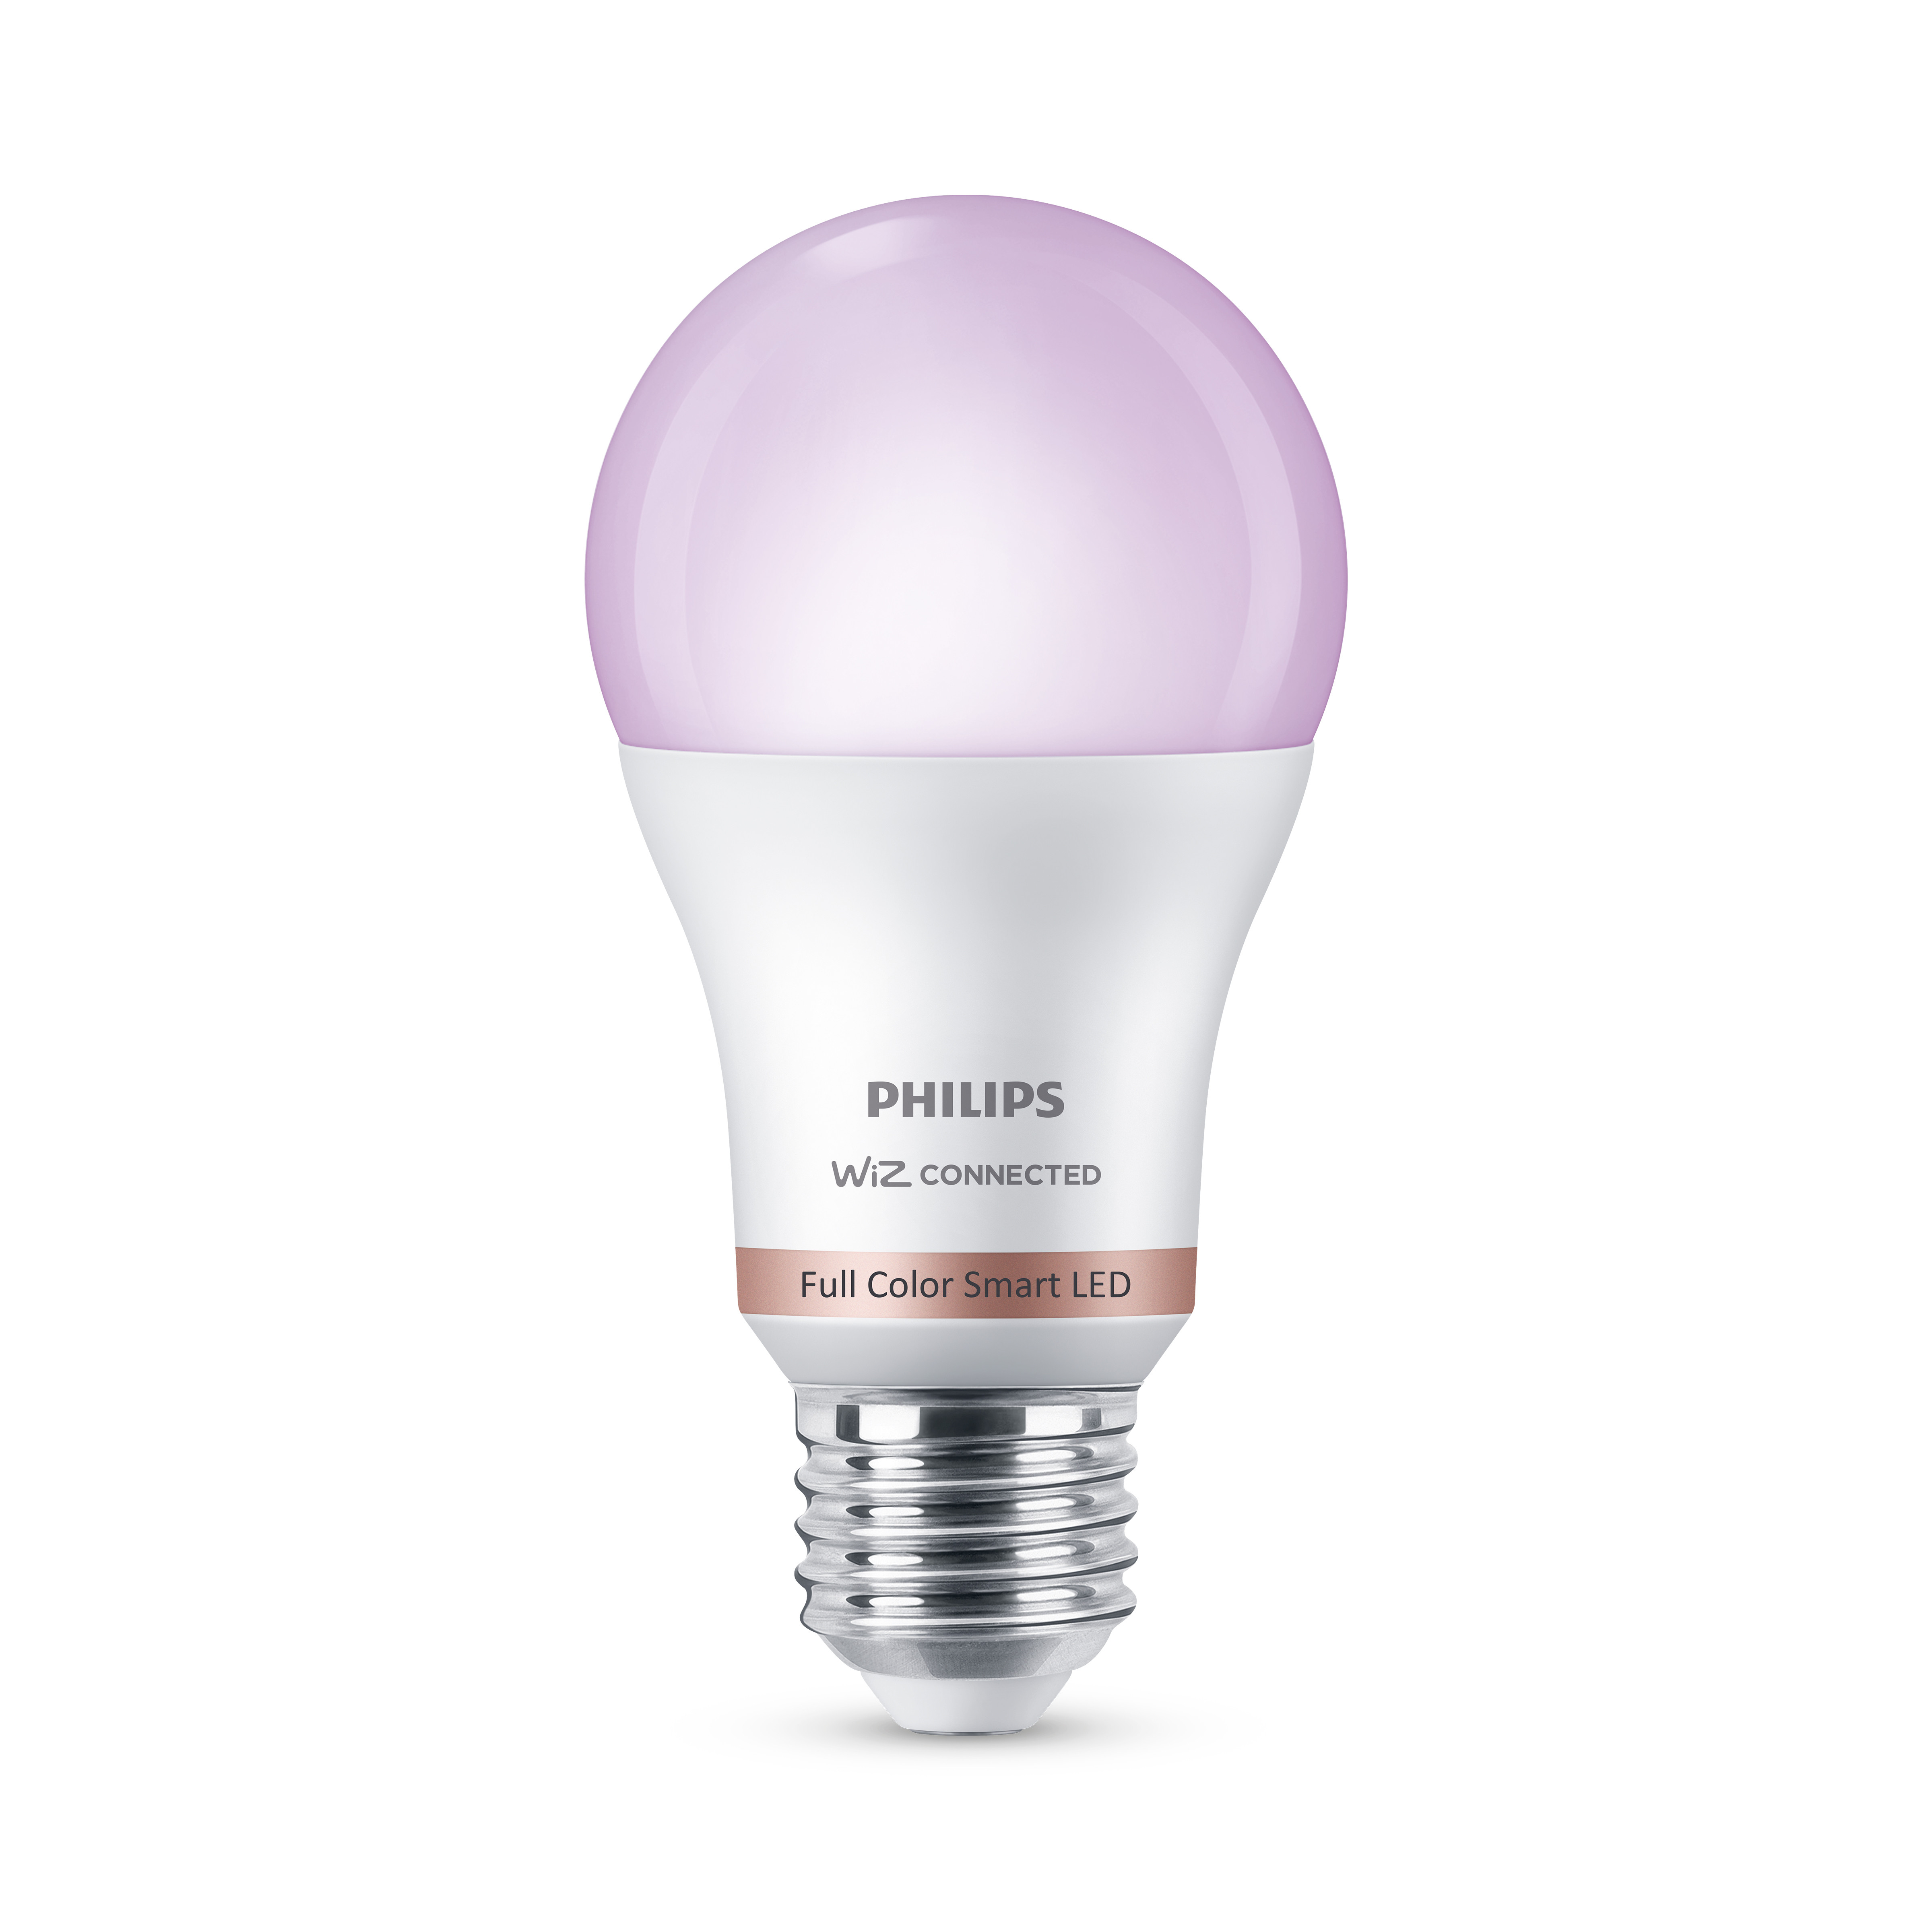 Philips Smart LED slimme verlichting is WiZ | TechFi